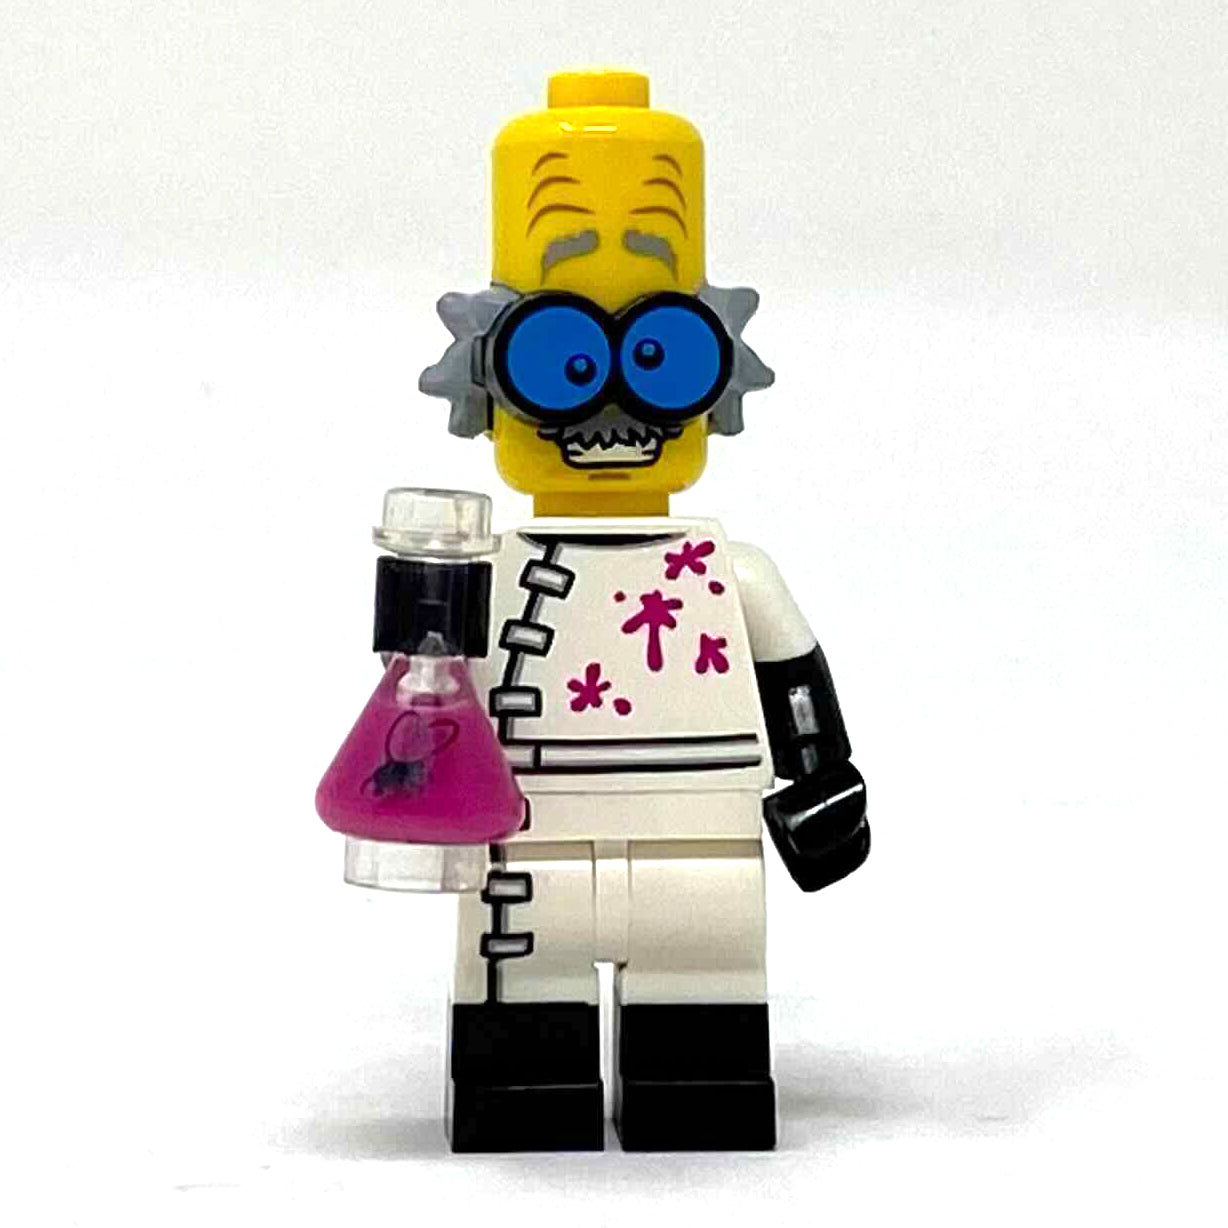 S14 Monster Scientist - Series 14 Minifigure (col213)